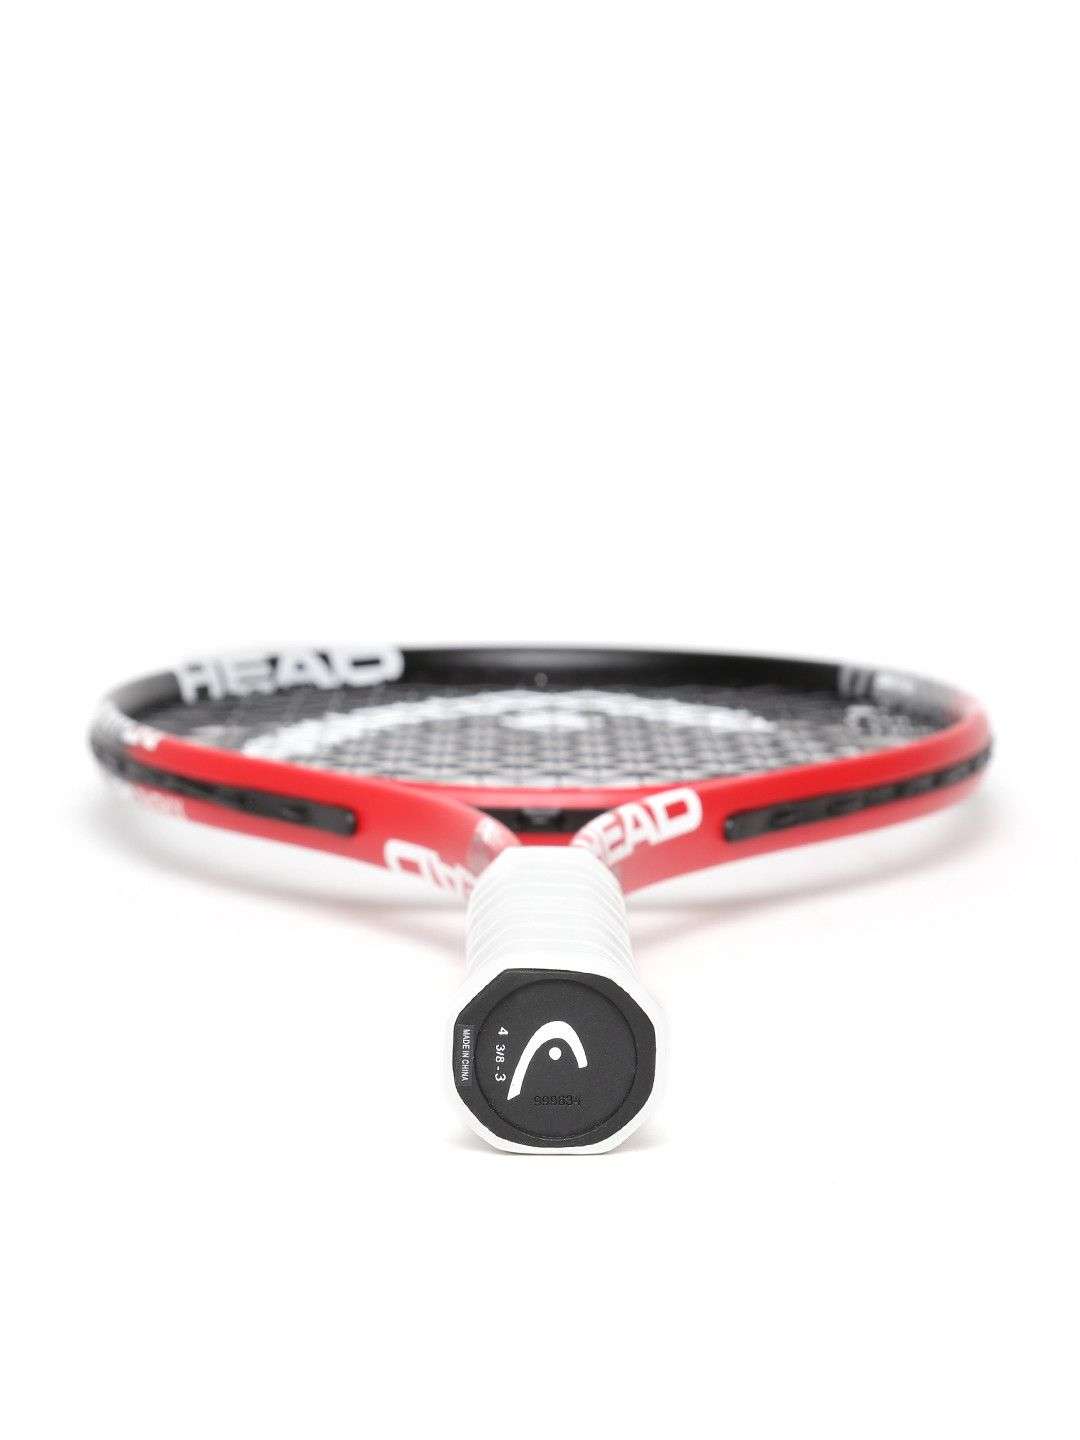 Head Nano Ti Reward Tennis Racquet - Red/Black - Best Price online Prokicksports.com